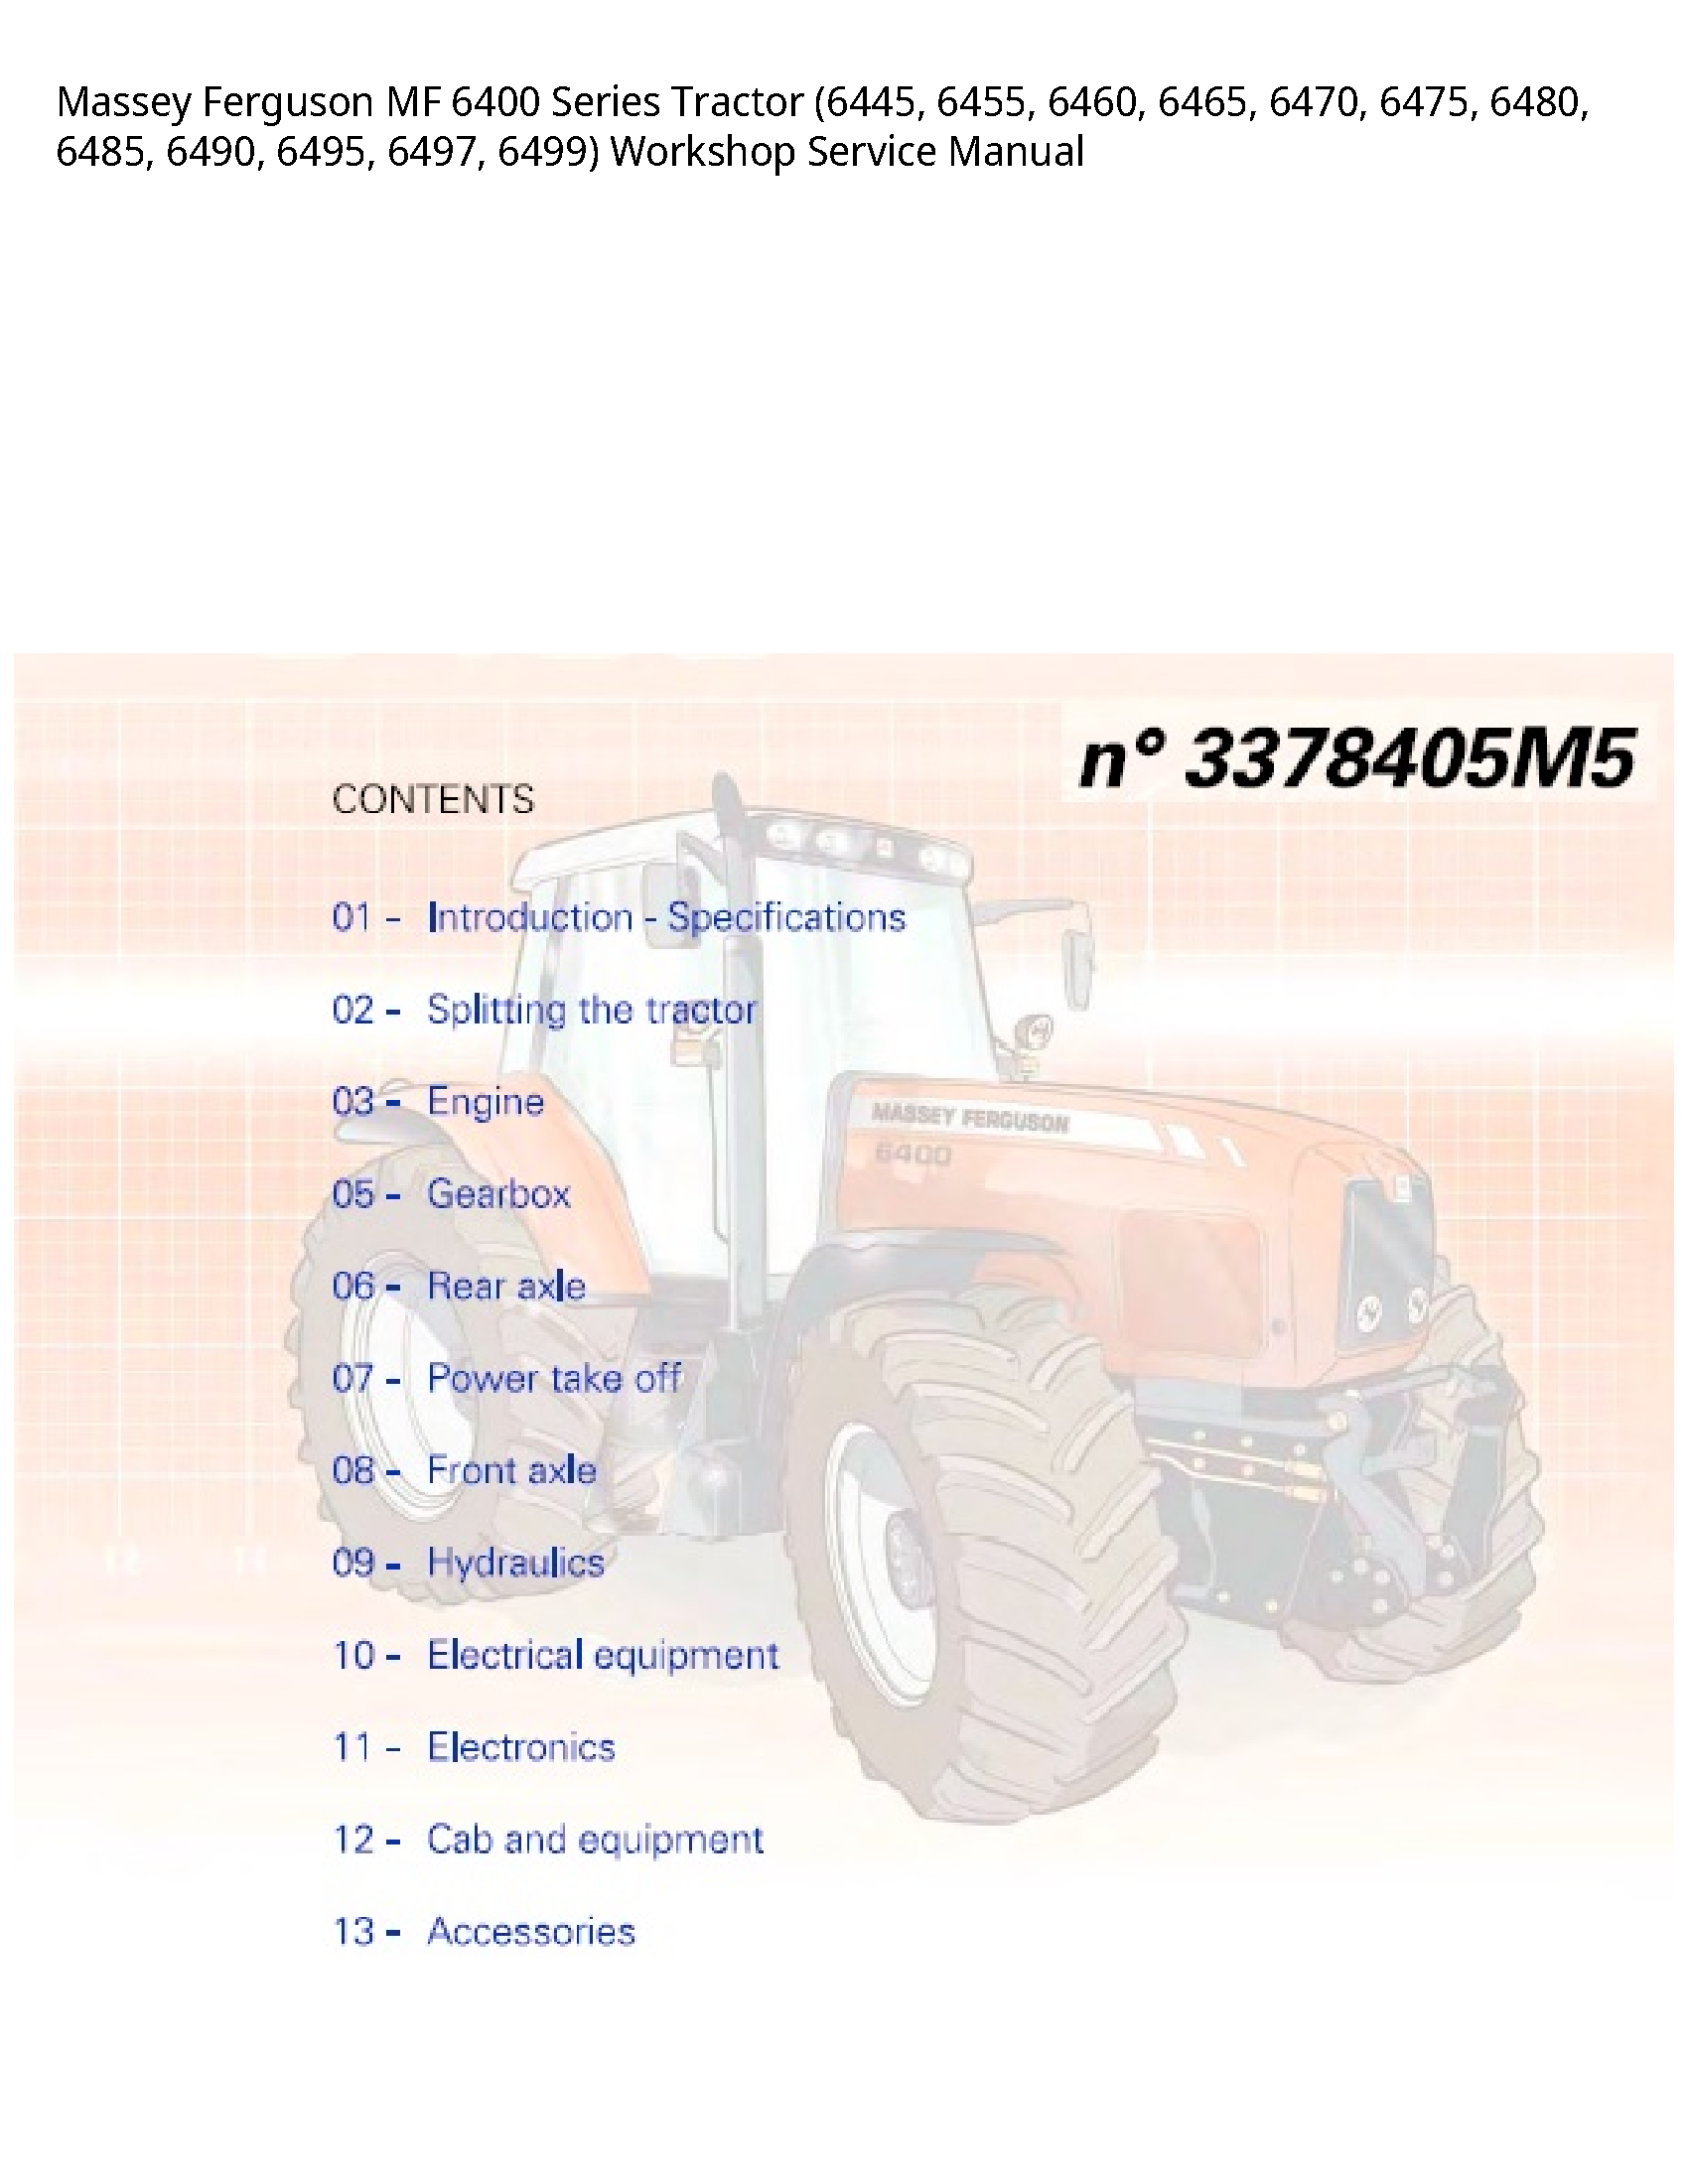 Massey Ferguson 6400 MF Series Tractor Service manual